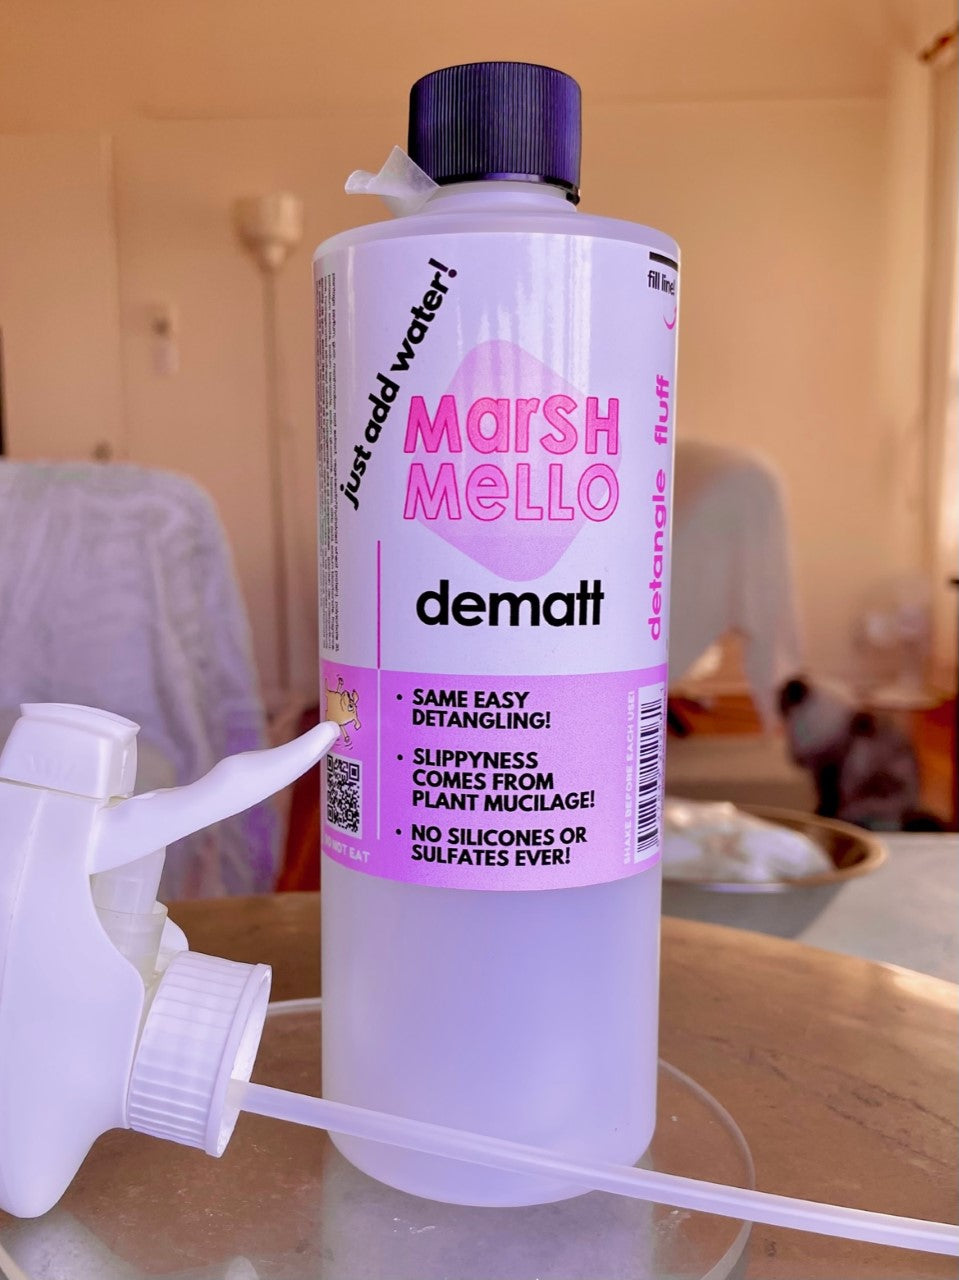 NEW!  MarshMello 2.0 Dematt!  17oz. size!  Just Add Water!